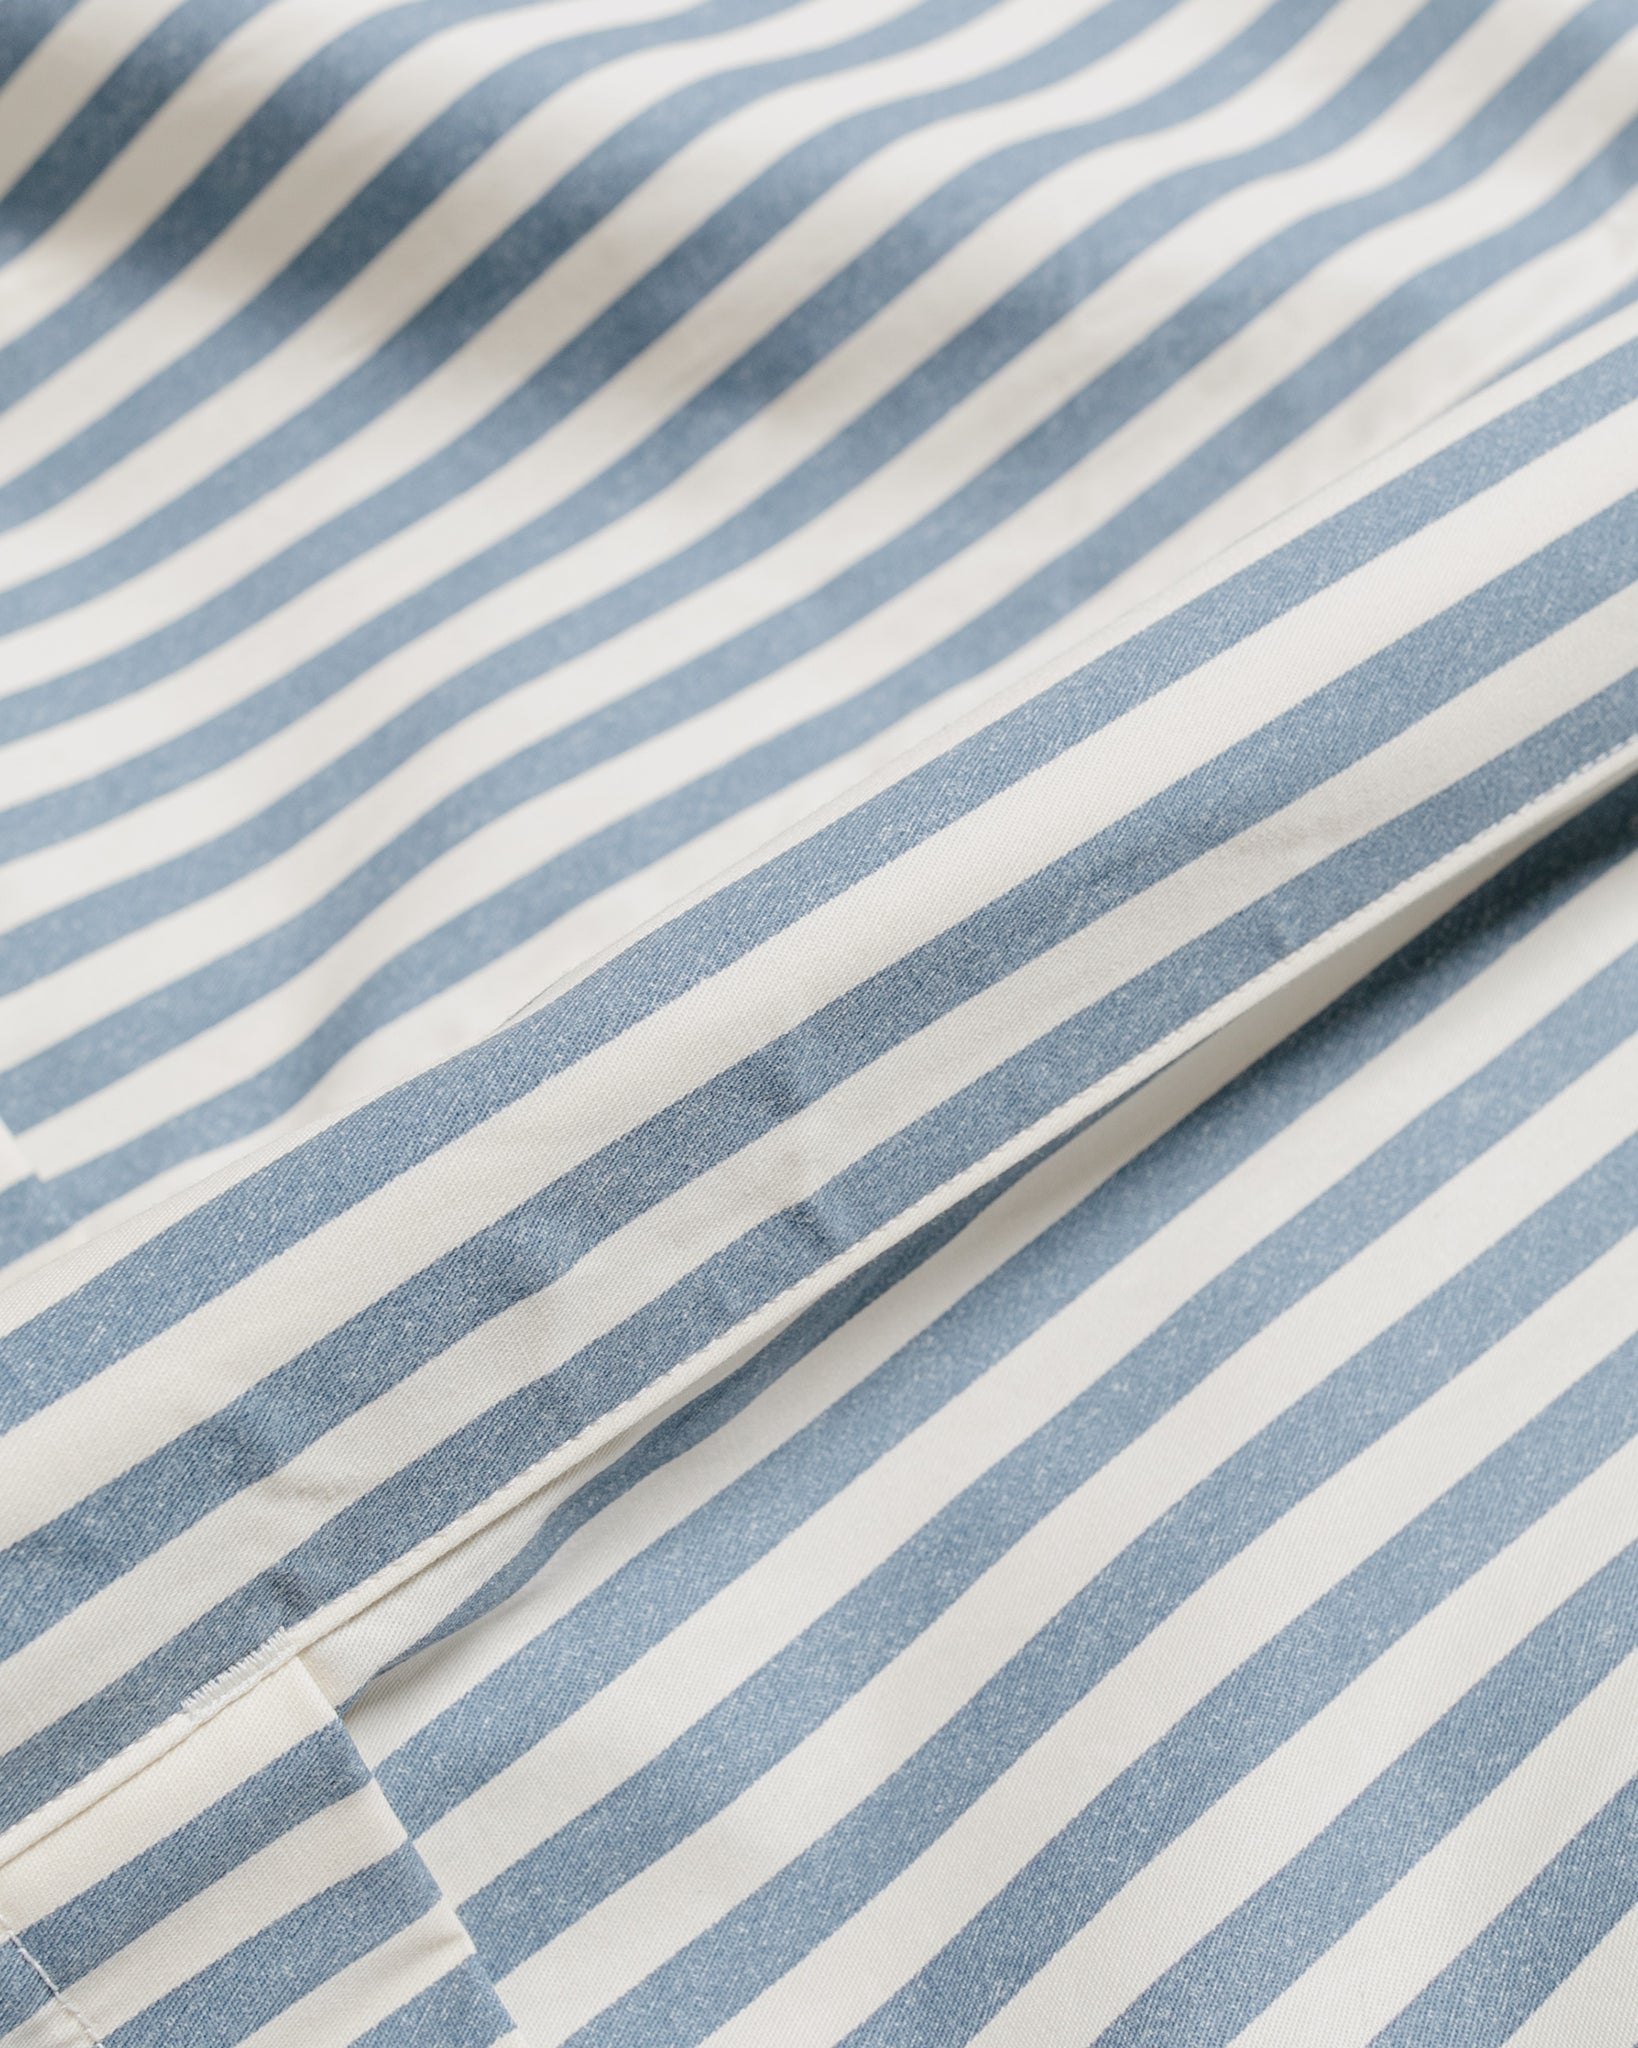 ts(s) Reversible Seam Taping Collarless Jacket Block Stripe Print Cotton Twill Cloth Blue fabric